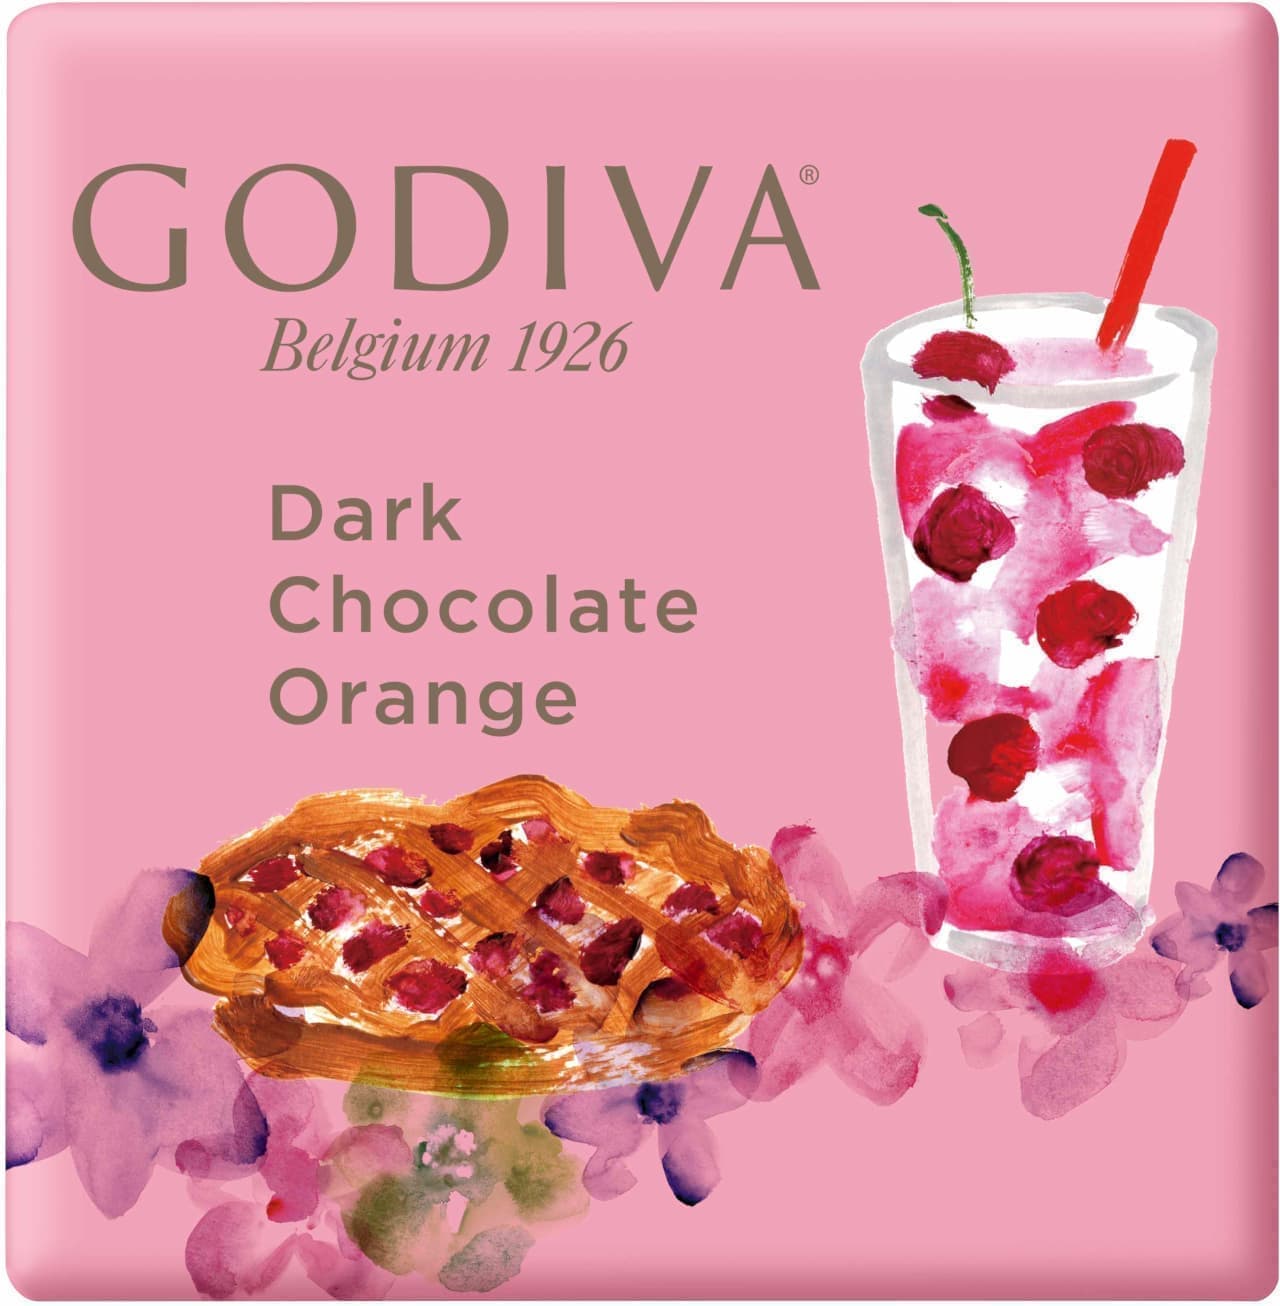 Godiva Dessert Moments: The Beginning of Spring